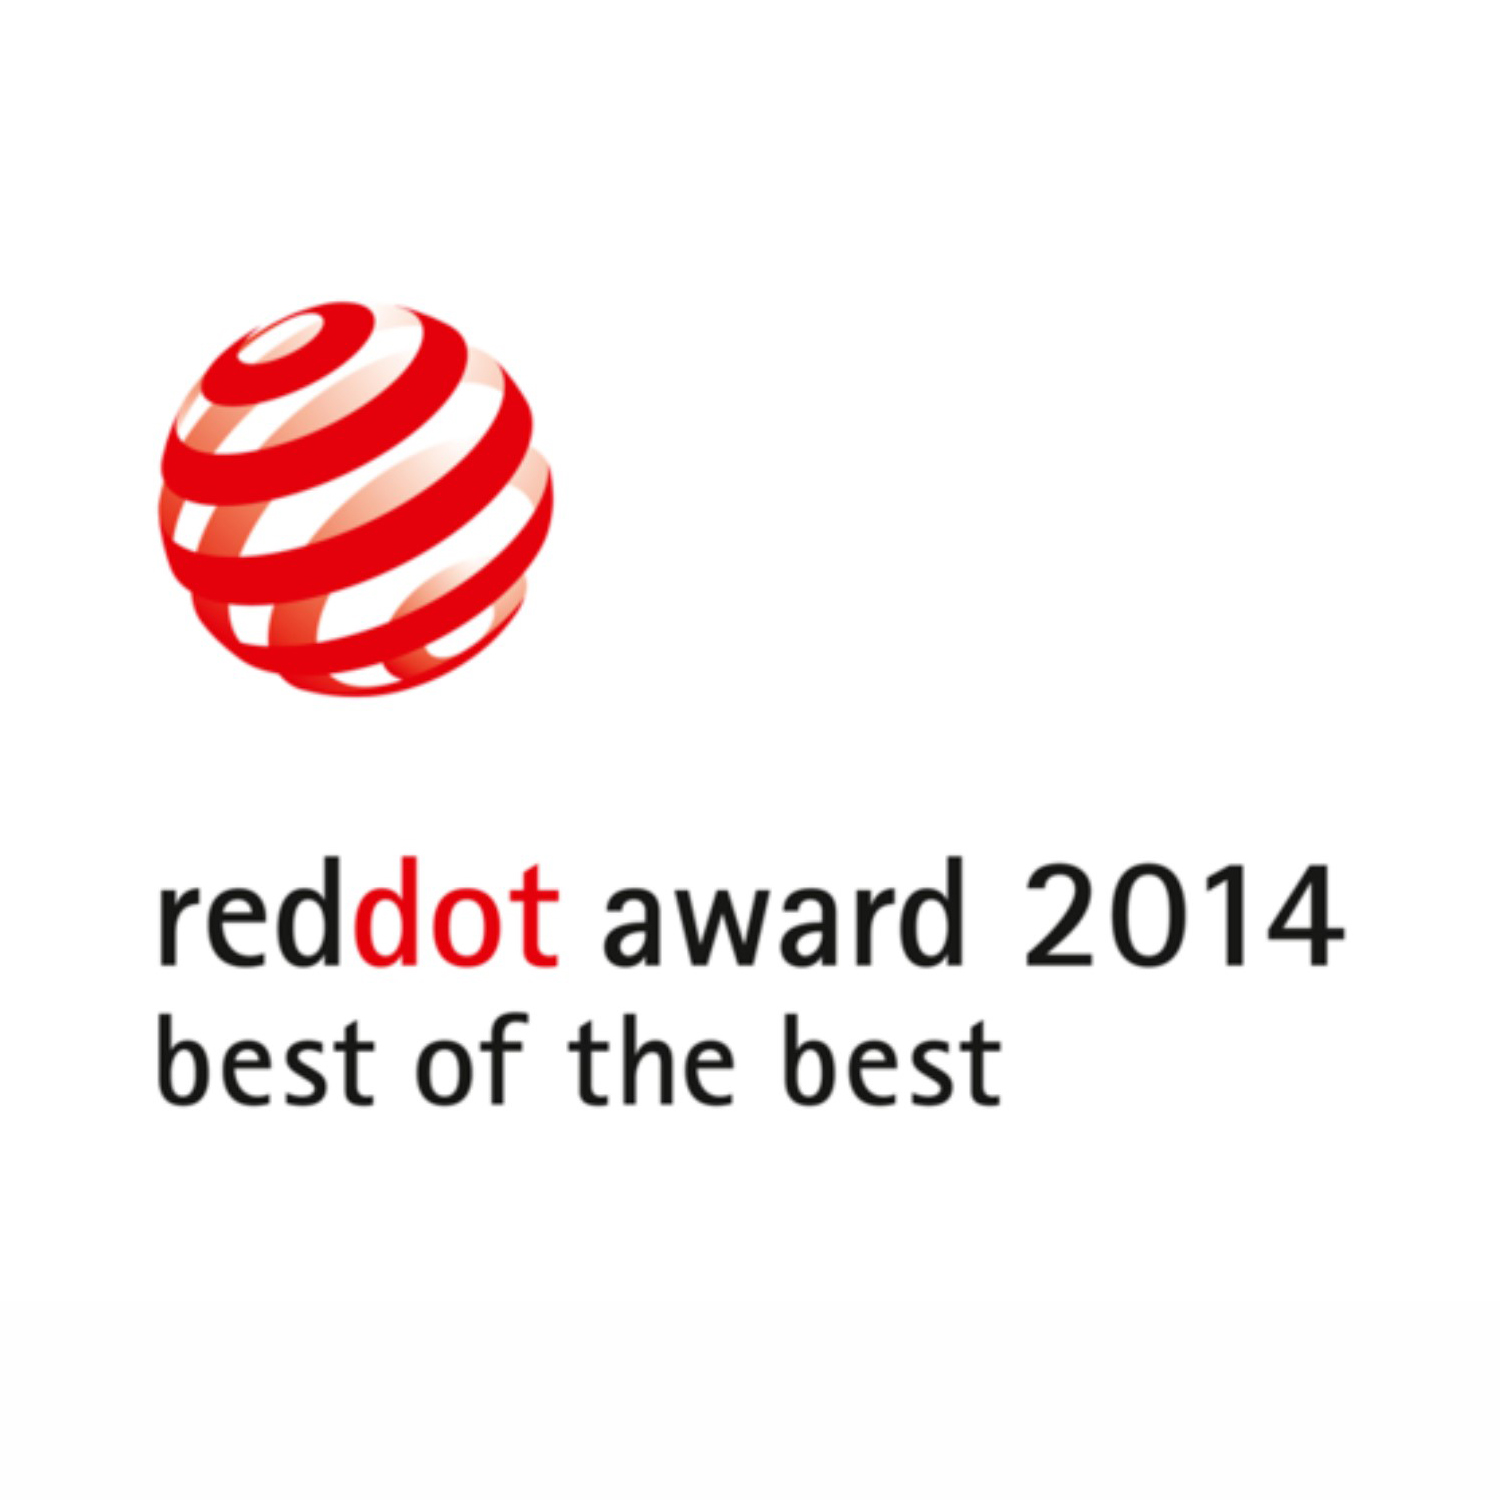 reddot award logo